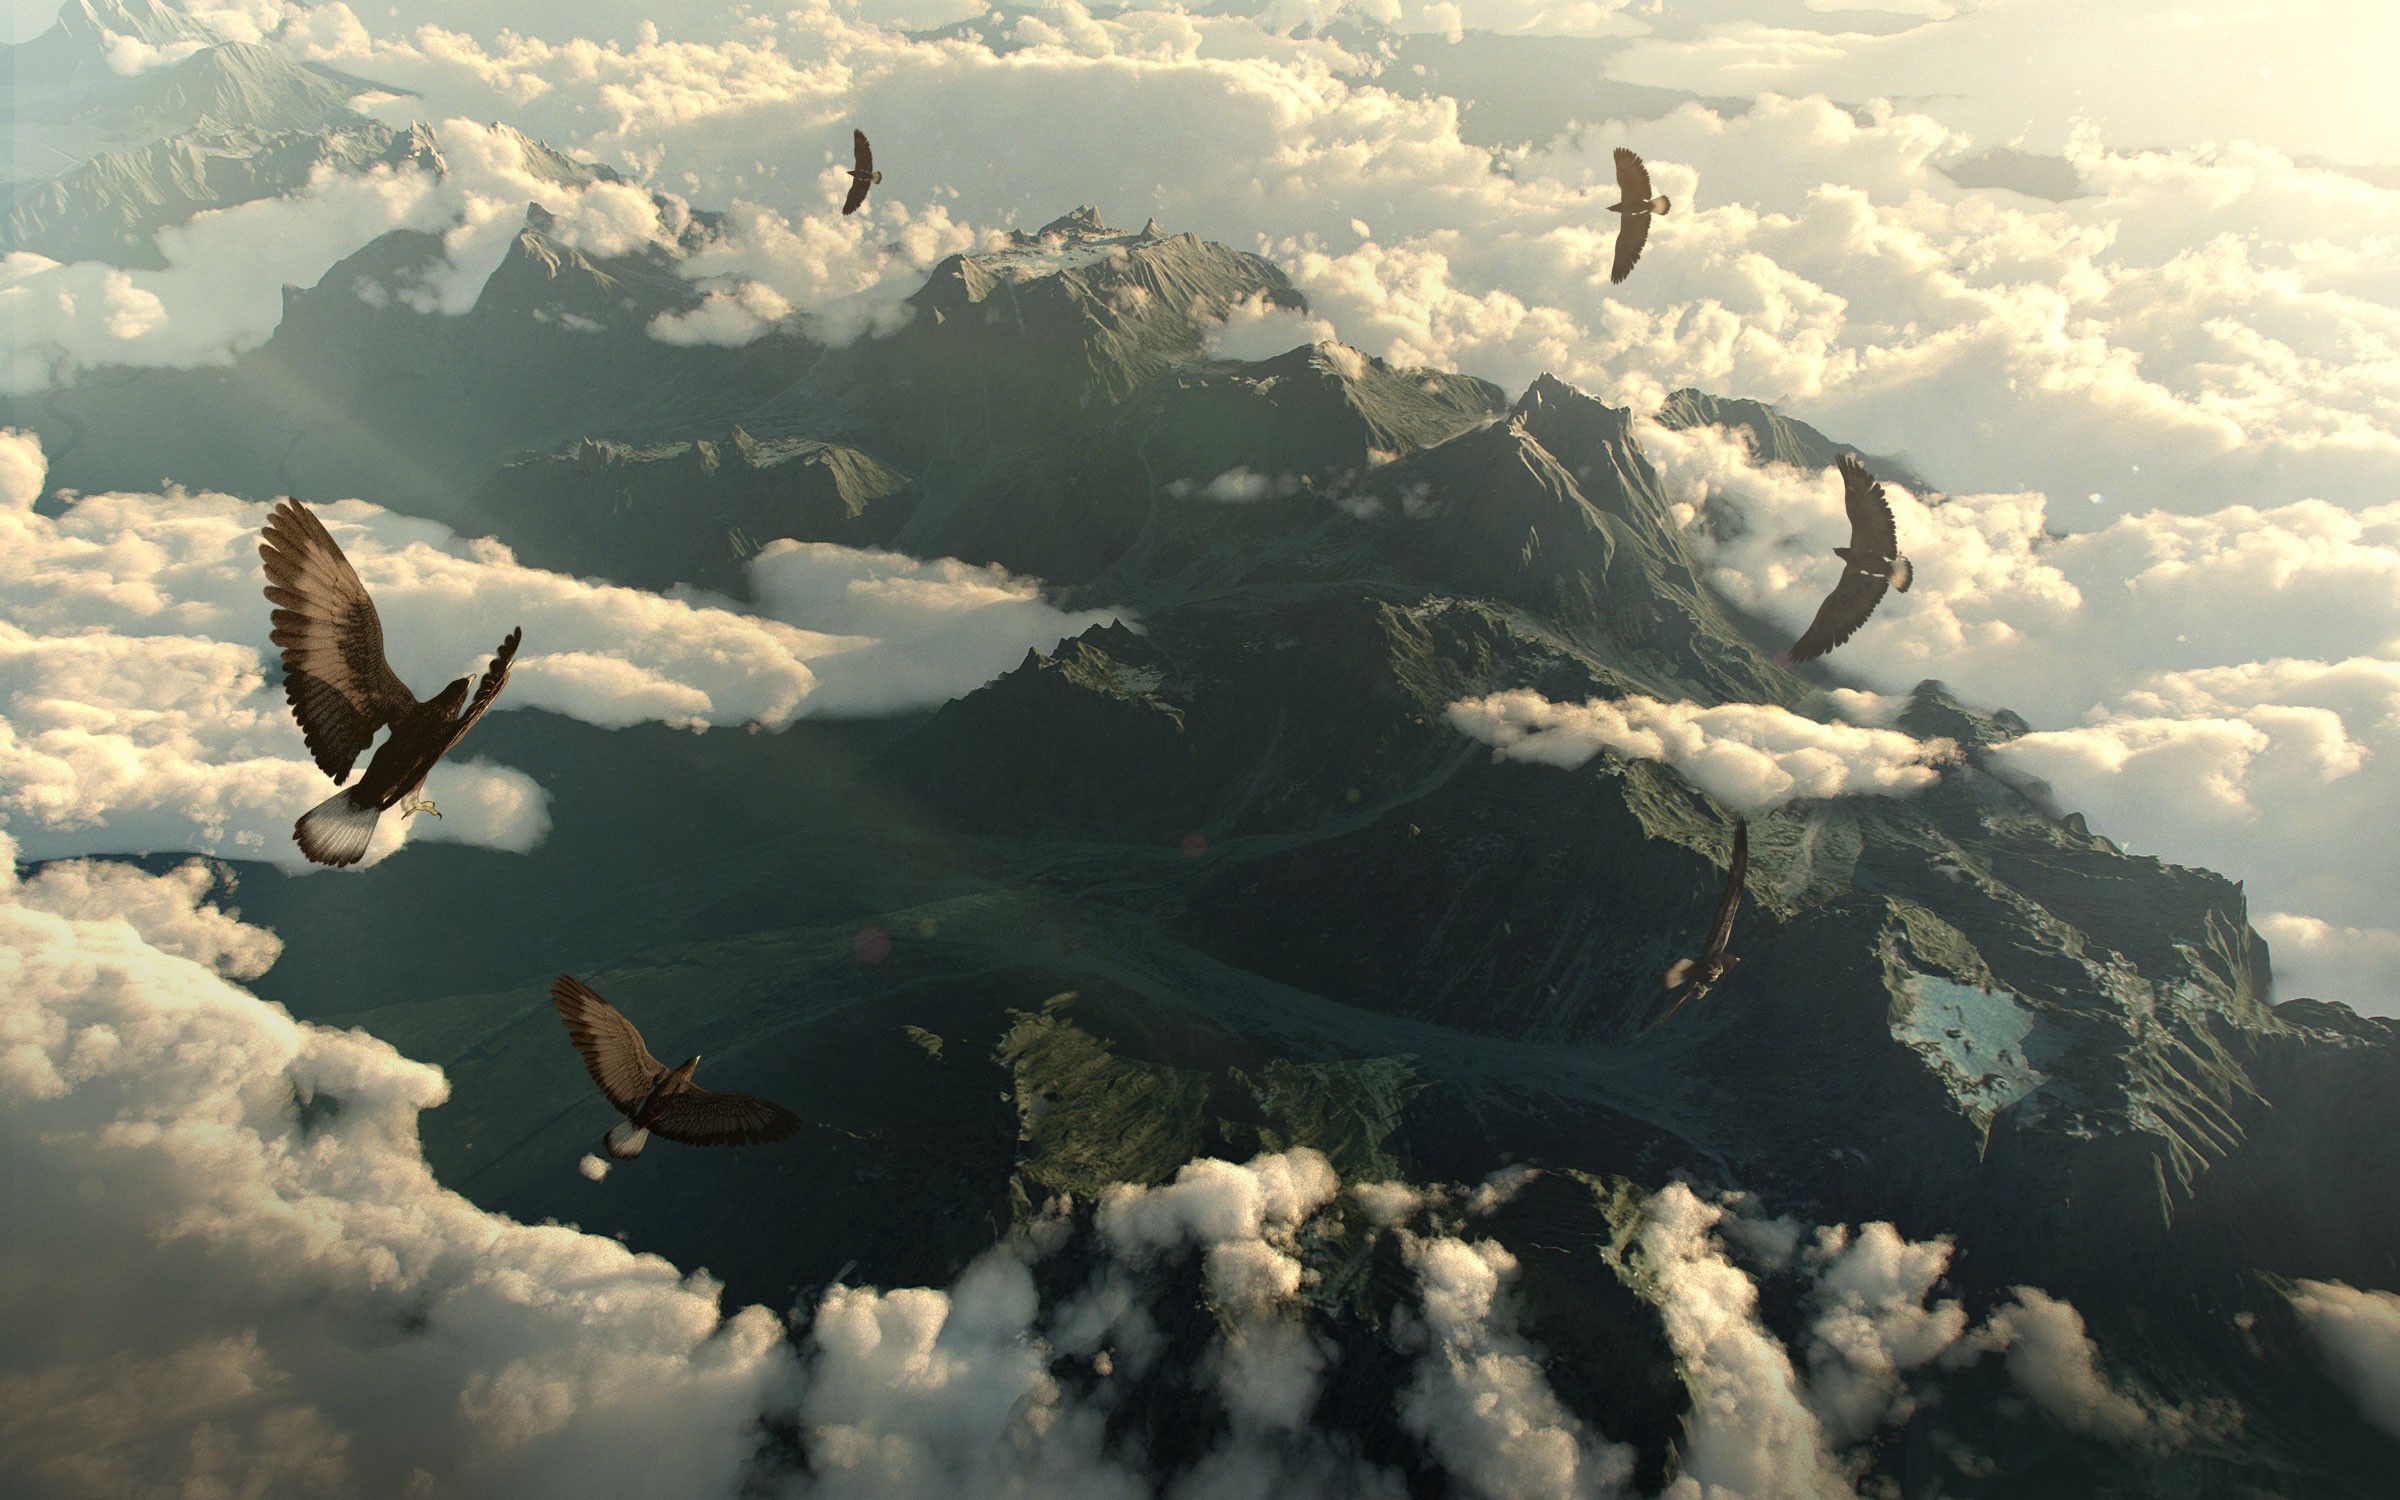 General 2400x1500 The Hobbit movies landscape New Zealand eagle